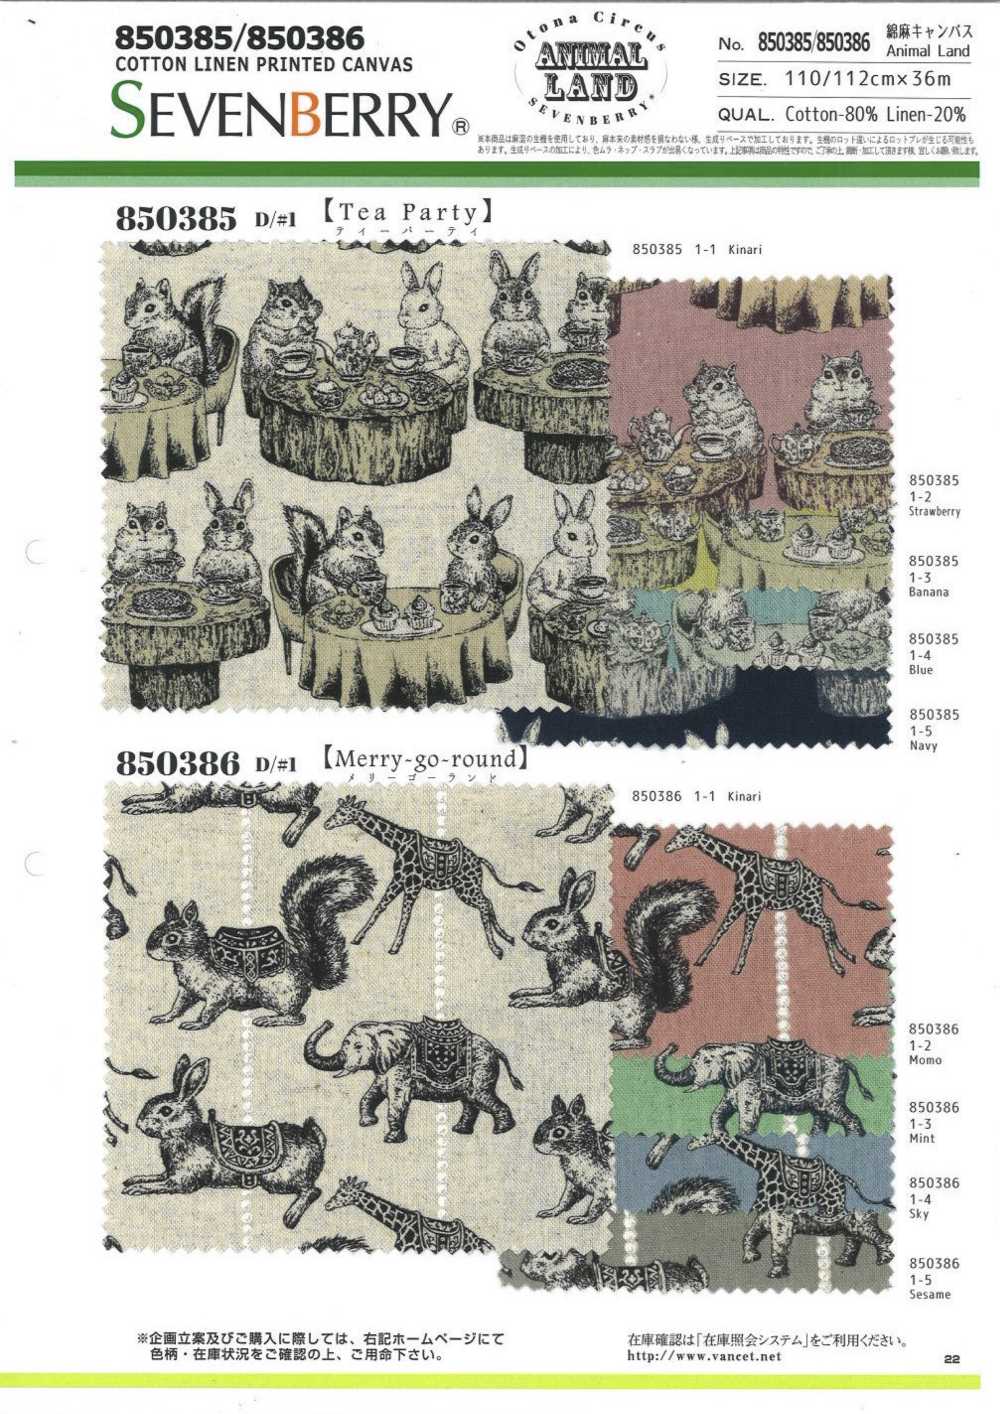 850386 Leinen Leinen Leinwand Tierland Karussell[Textilgewebe] VANCET